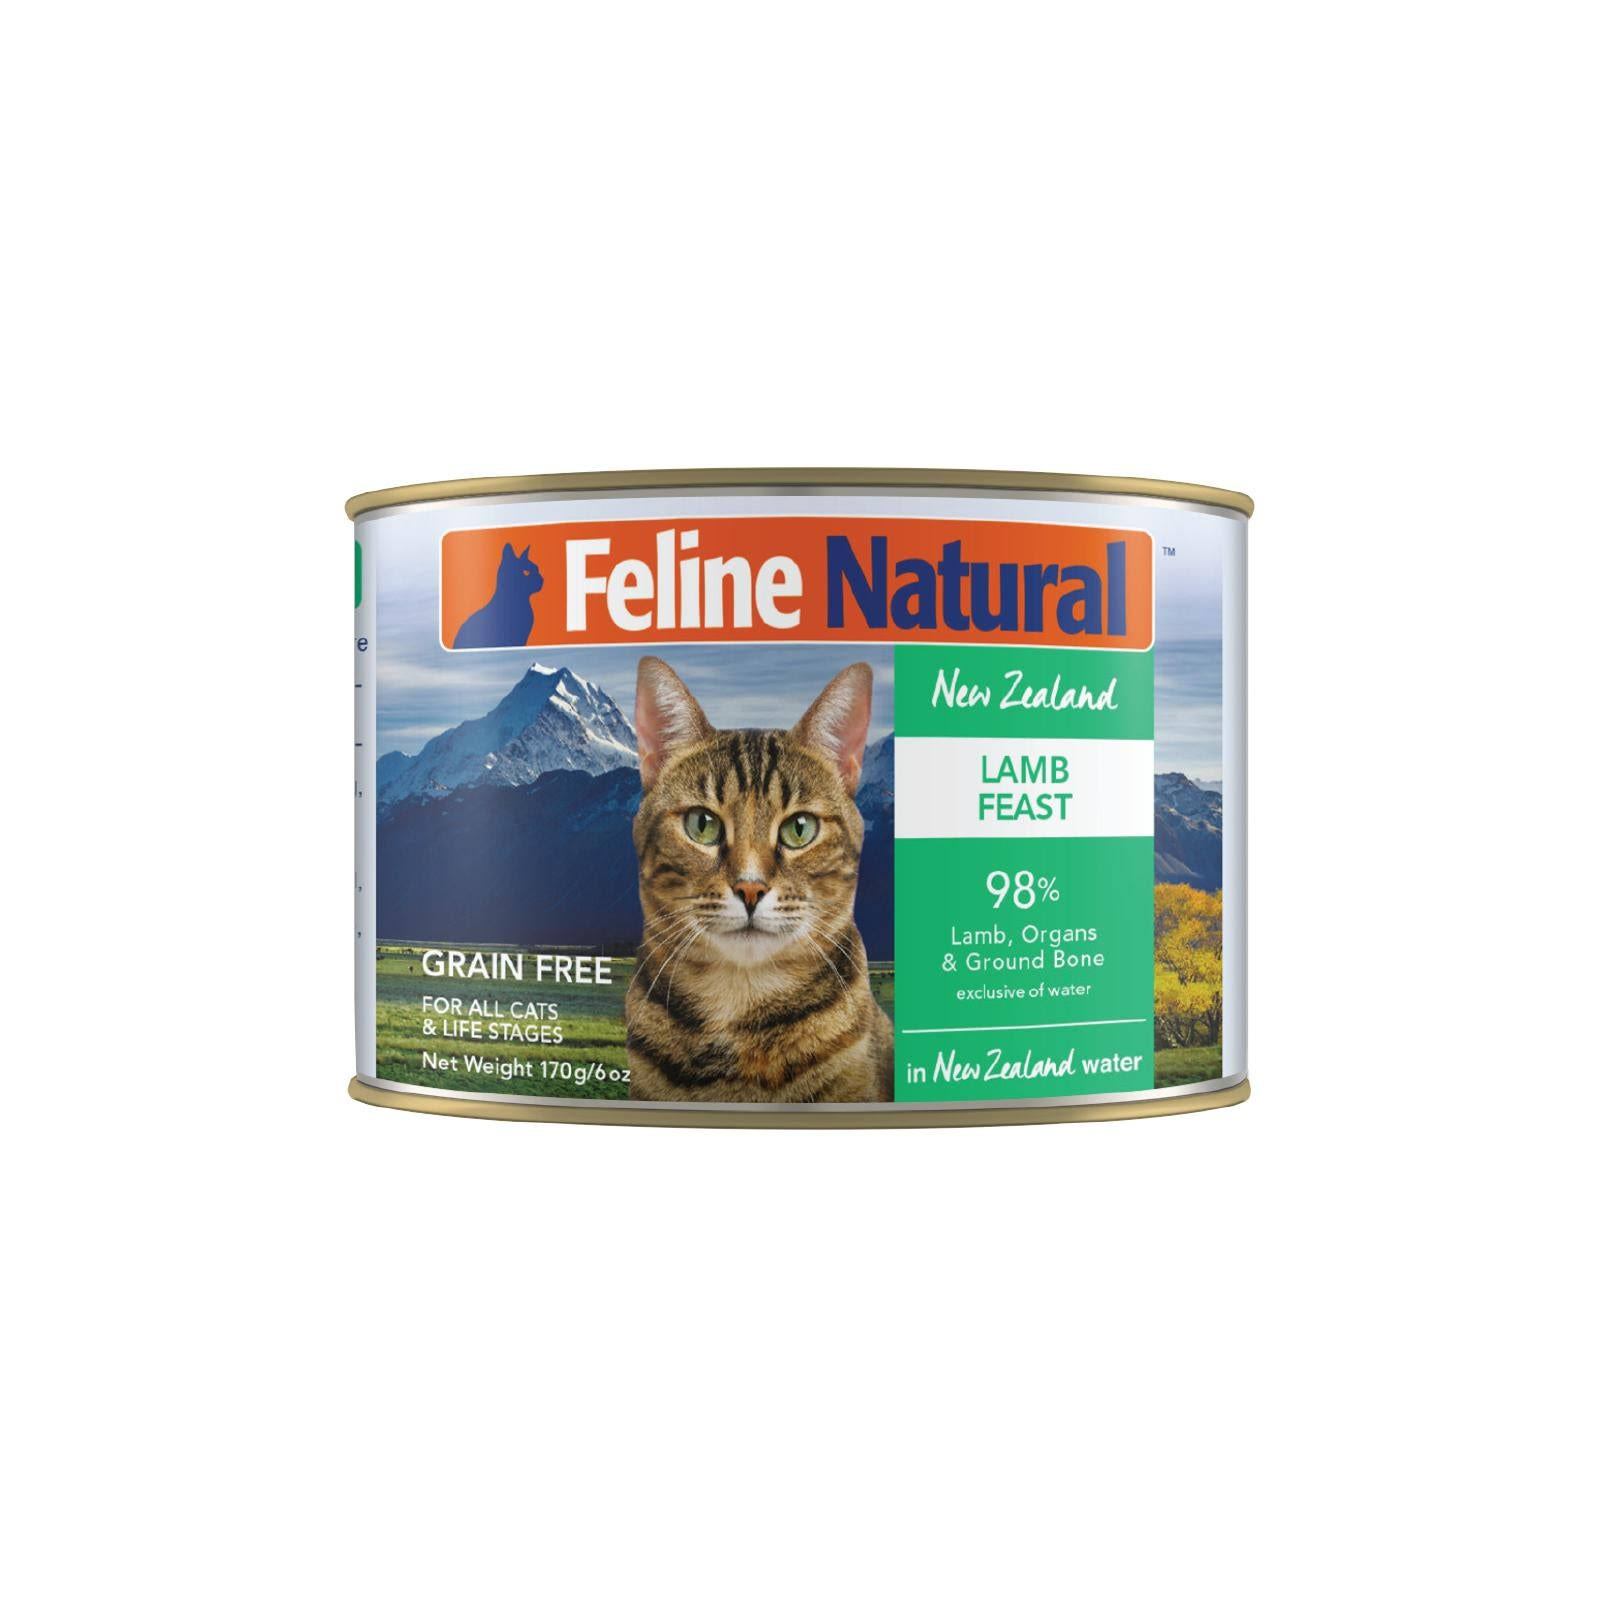 Feline Natural Lamb Feast Cats Food Pack - 24pk, 170g